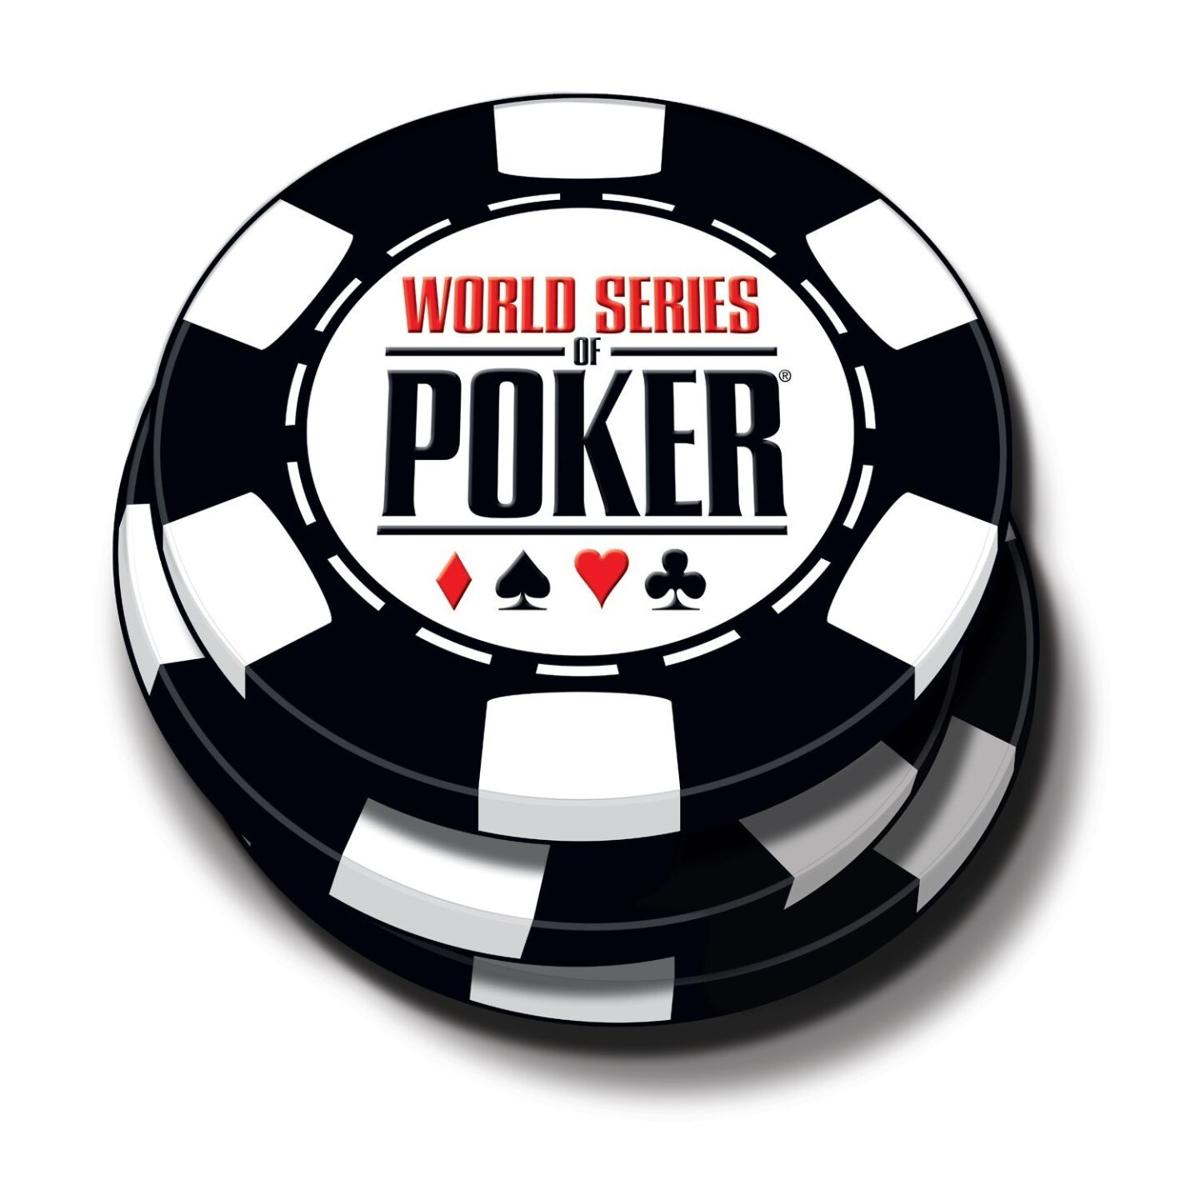 World Series Of Poker Announces Plans For 2021 News Wfmz Com